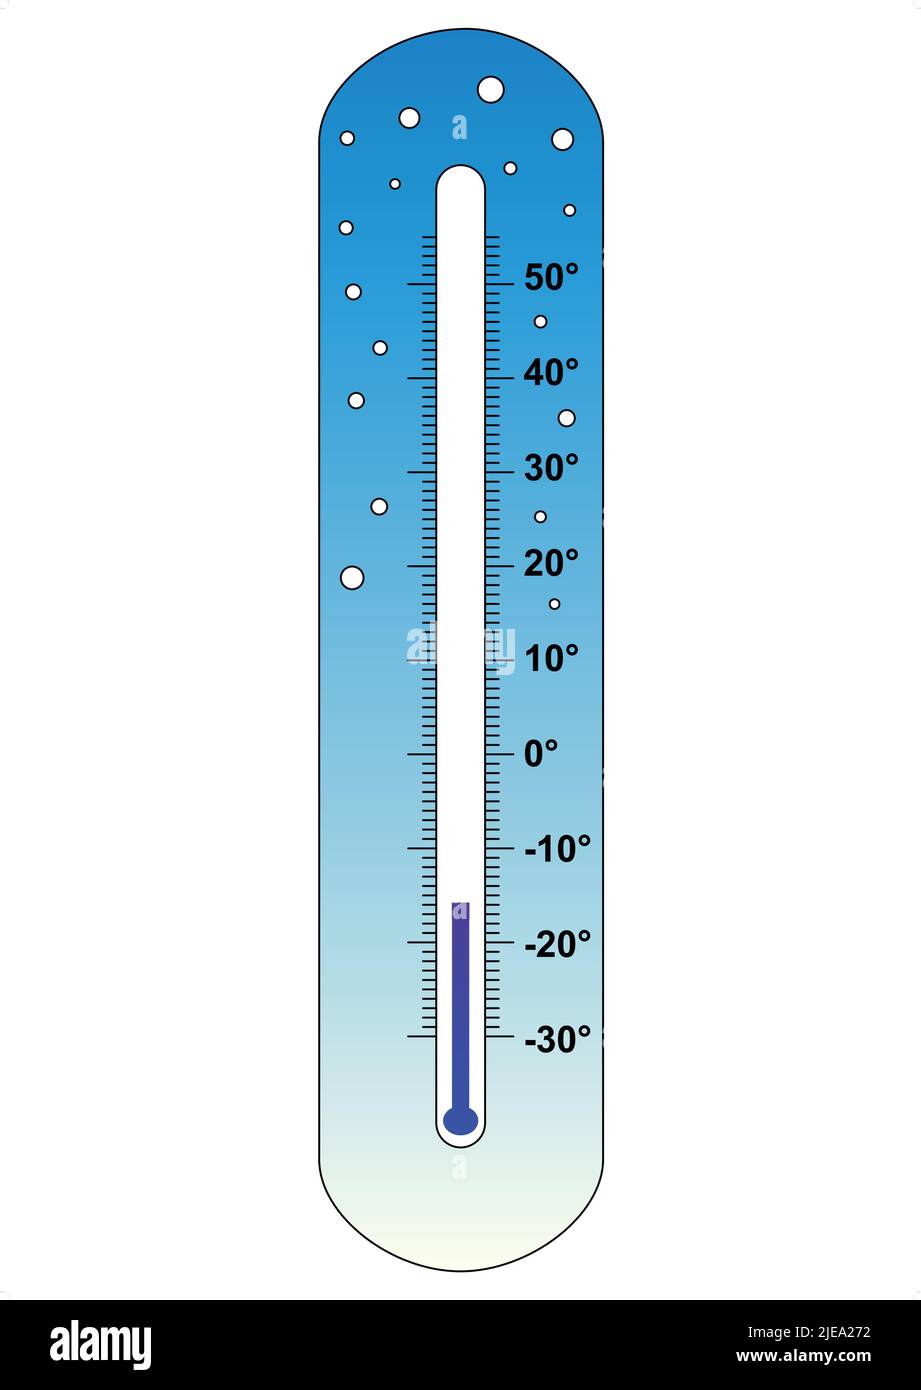 https://c8.alamy.com/comp/2JEA272/mercury-thermometer-cold-temperature-vector-illustration-blue-and-white-background-2JEA272.jpg